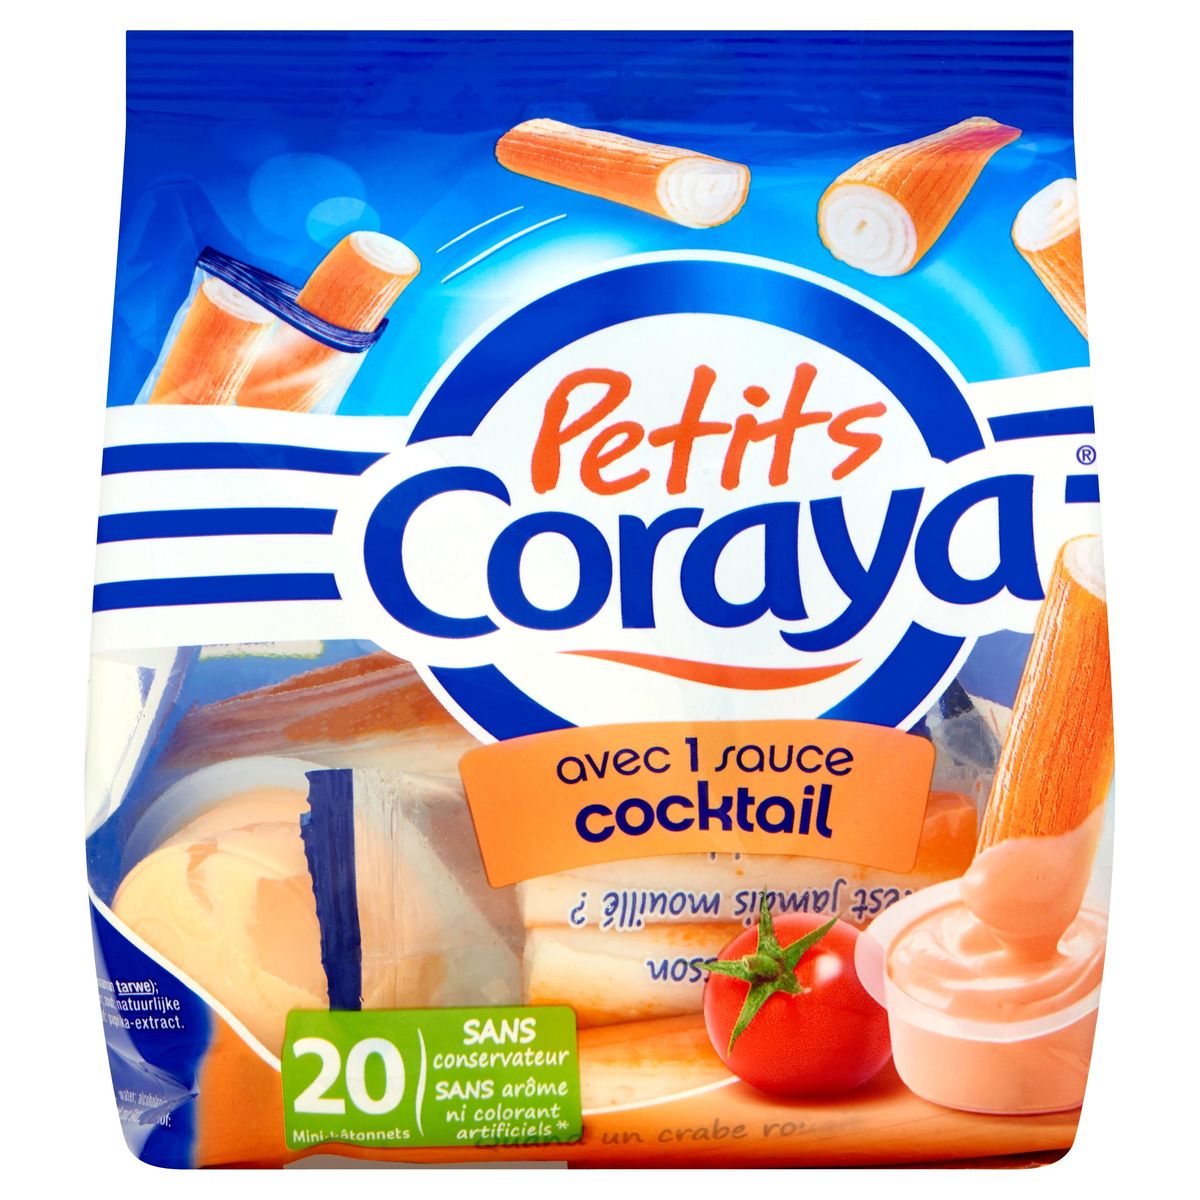 Coraya Petits 21 Mini-Bâtonnets avec 1 Sauce Cocktail 210 g